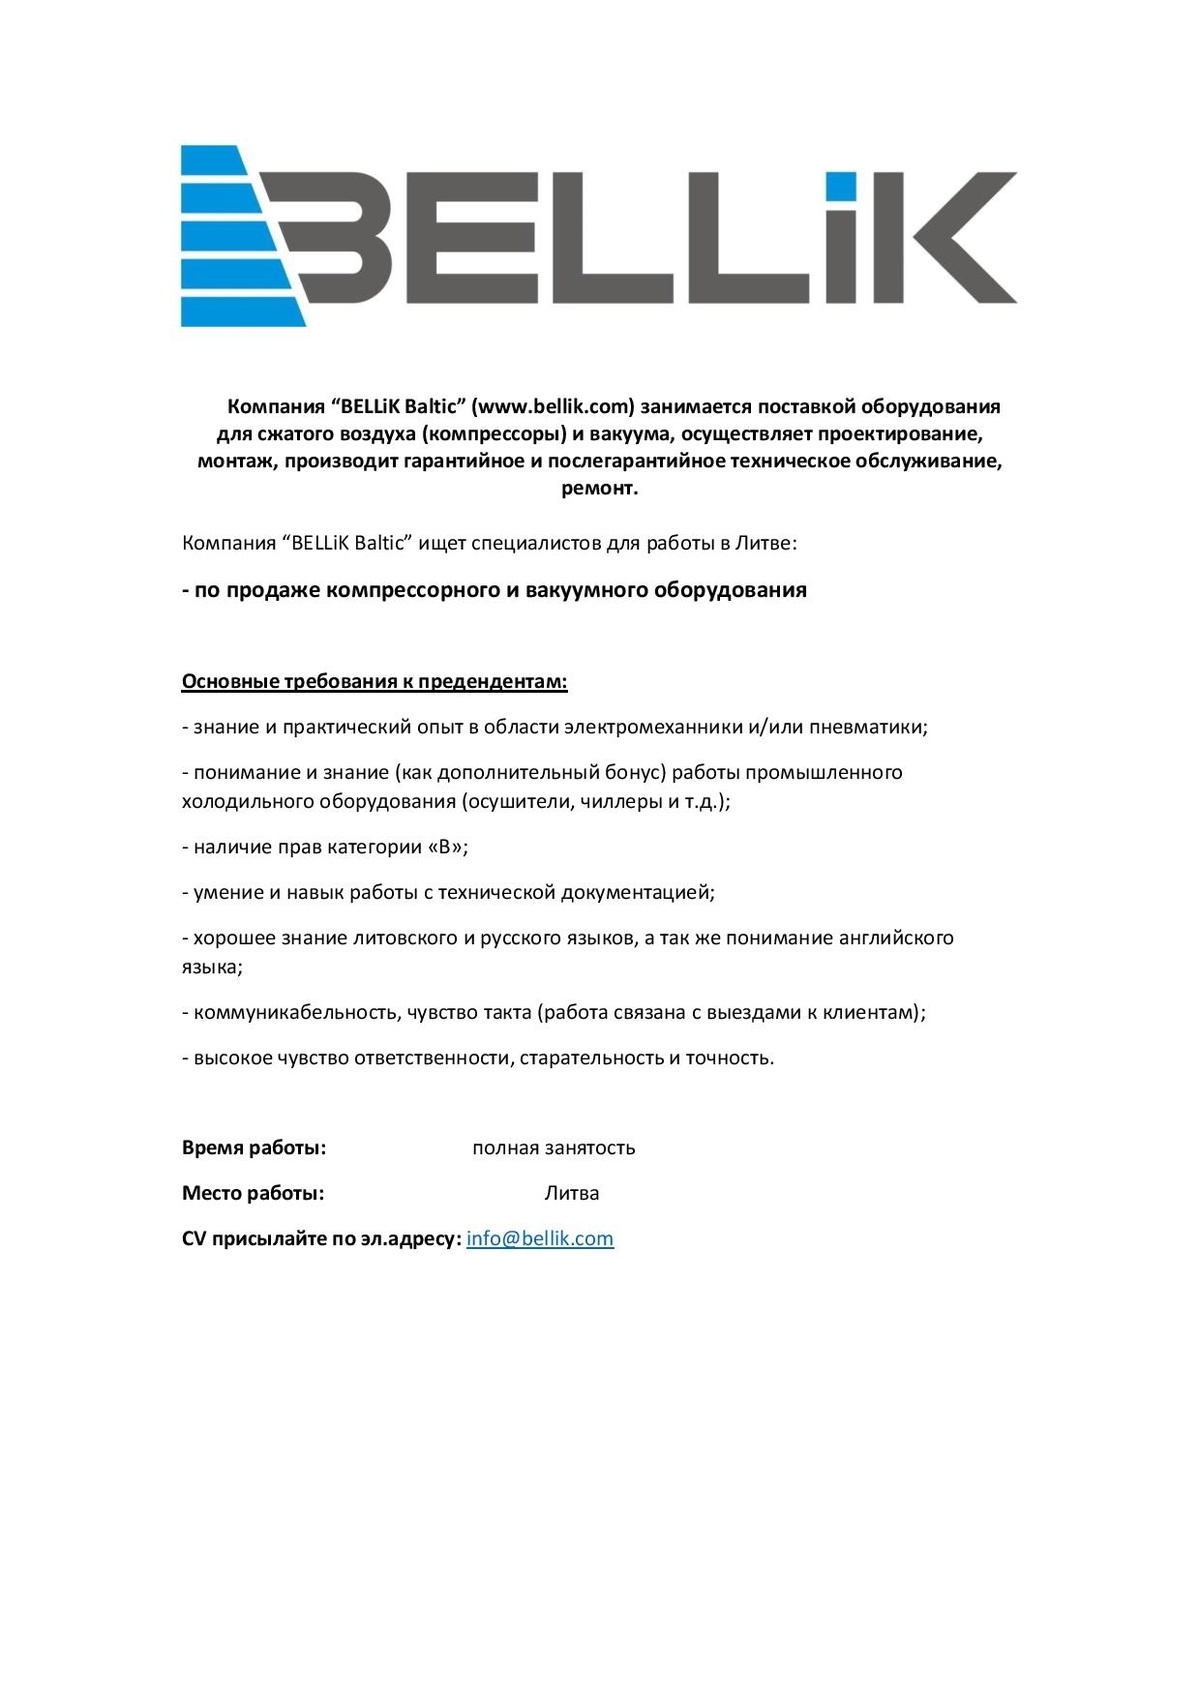 BELLiK Baltic, SIA Продавец компрессорного оборудования 